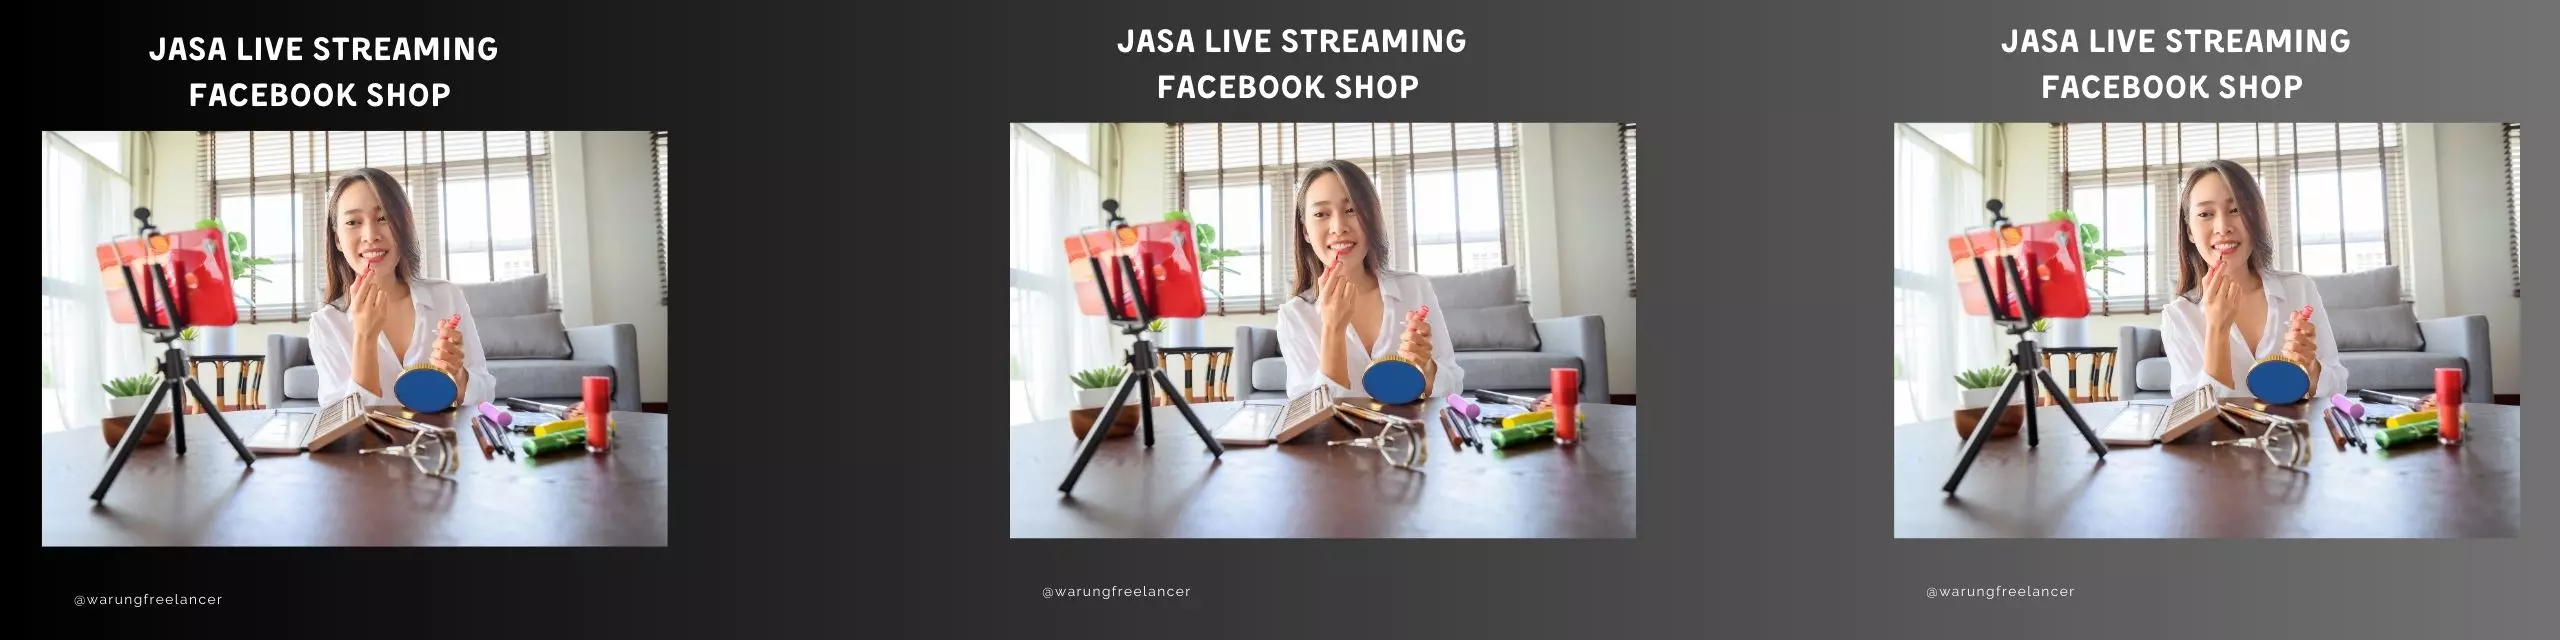 Facebook Shop Live Streaming Services